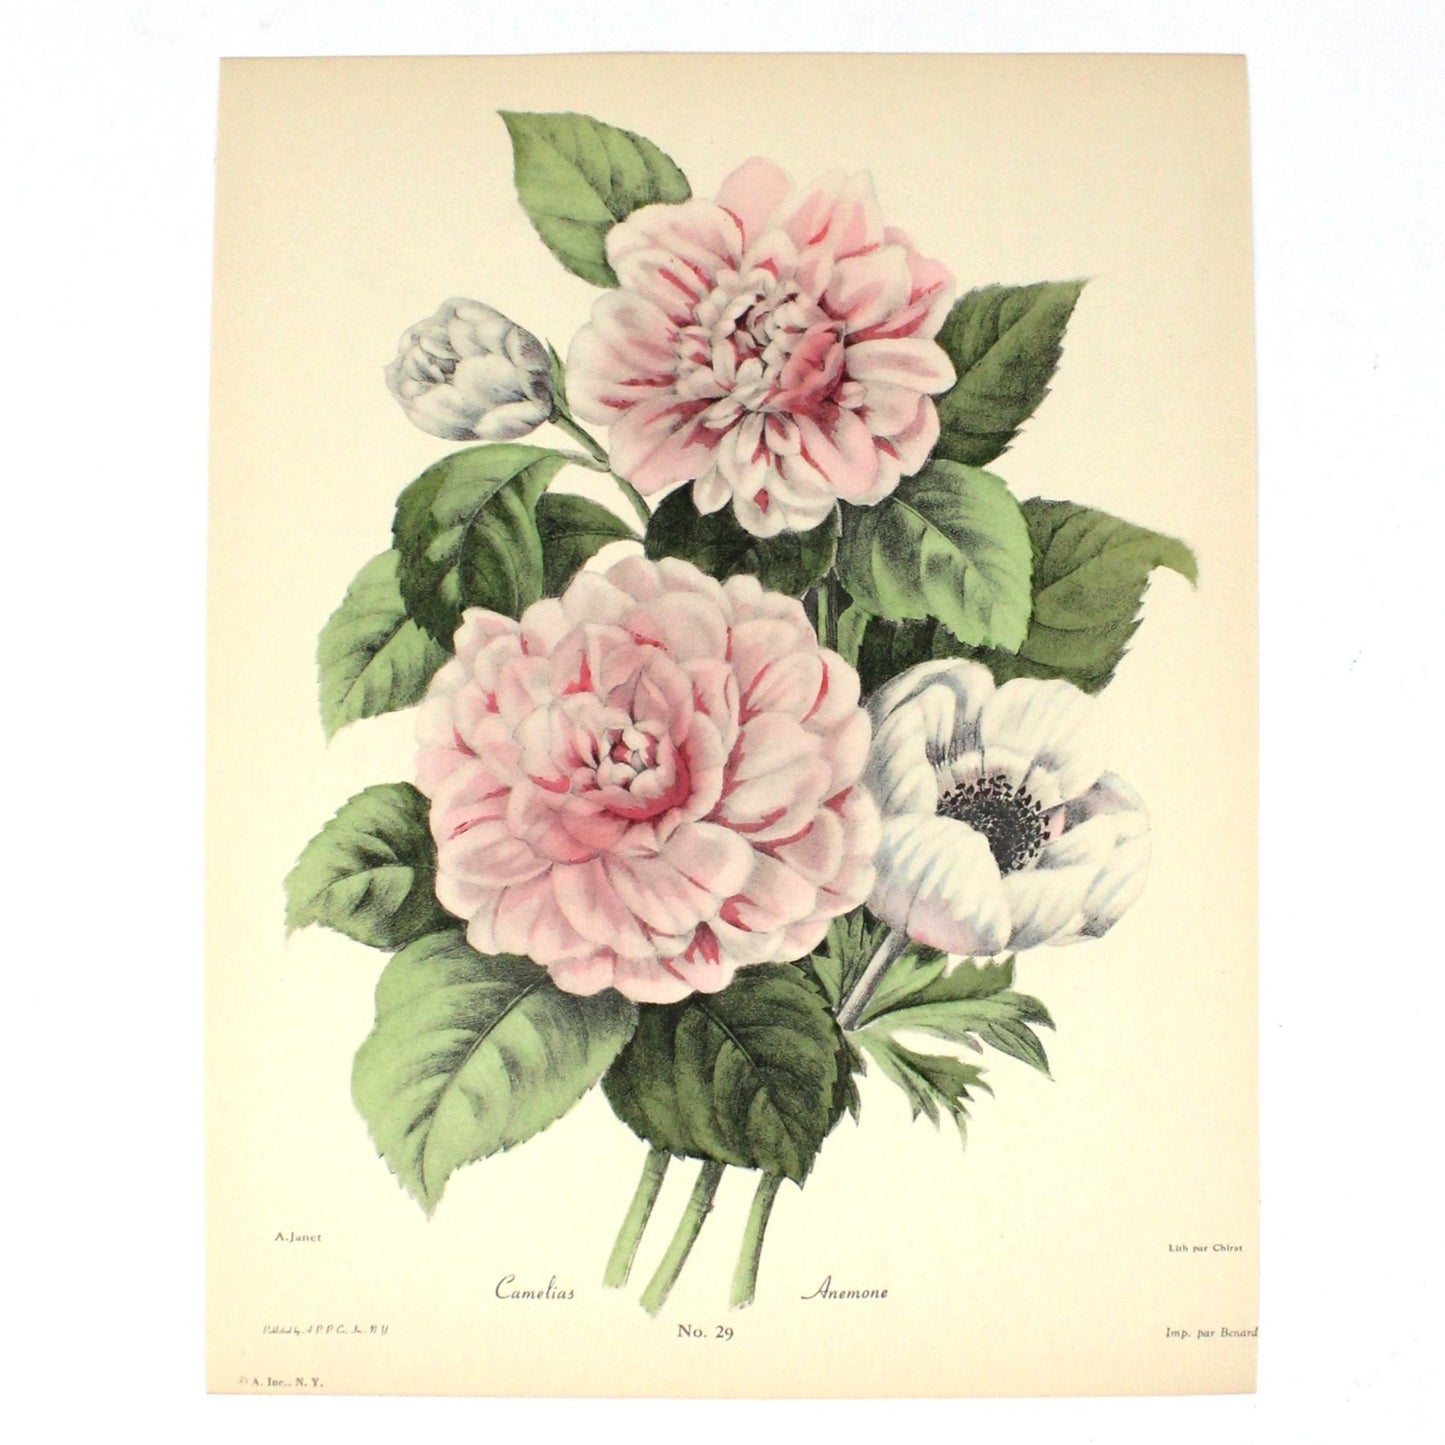 Print, Botanical Camelias and Anemone Print, Chirat, 29, Vintage